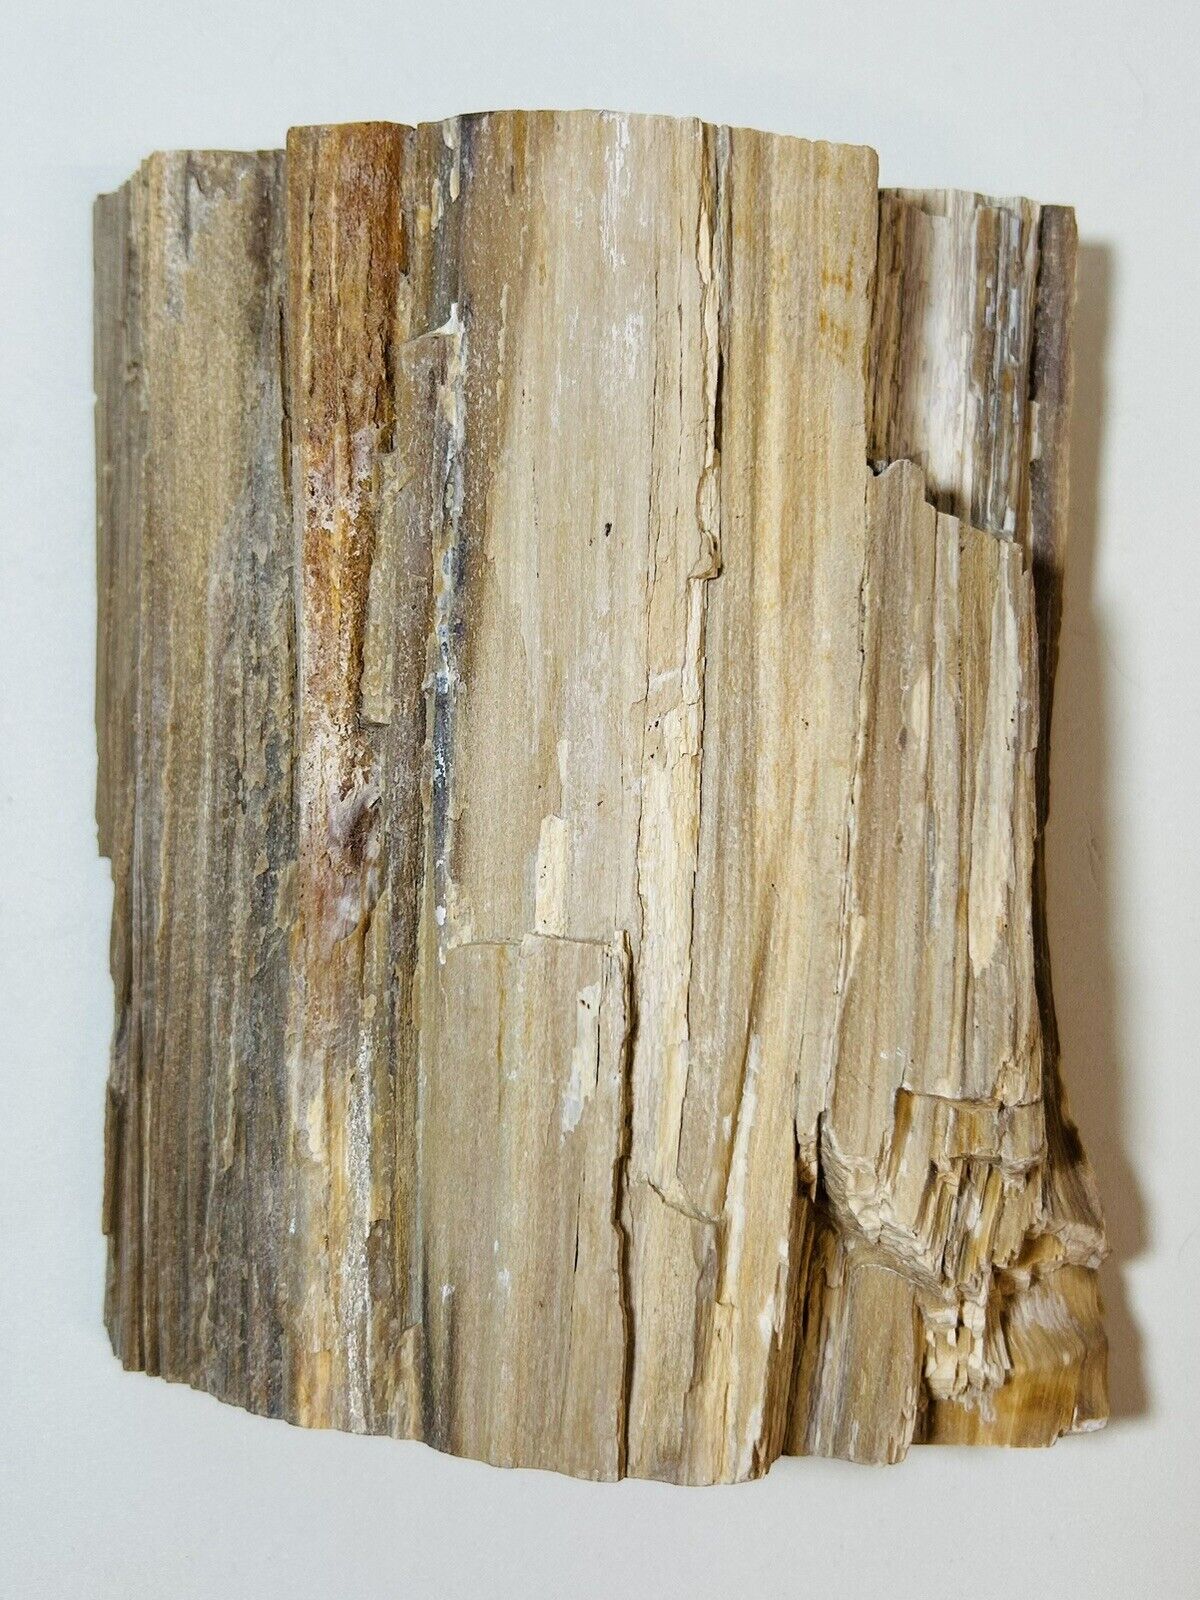 Rare 1100g Hell’s Canyon Herringbone Petrified Wood Specimen Cut Limb Section